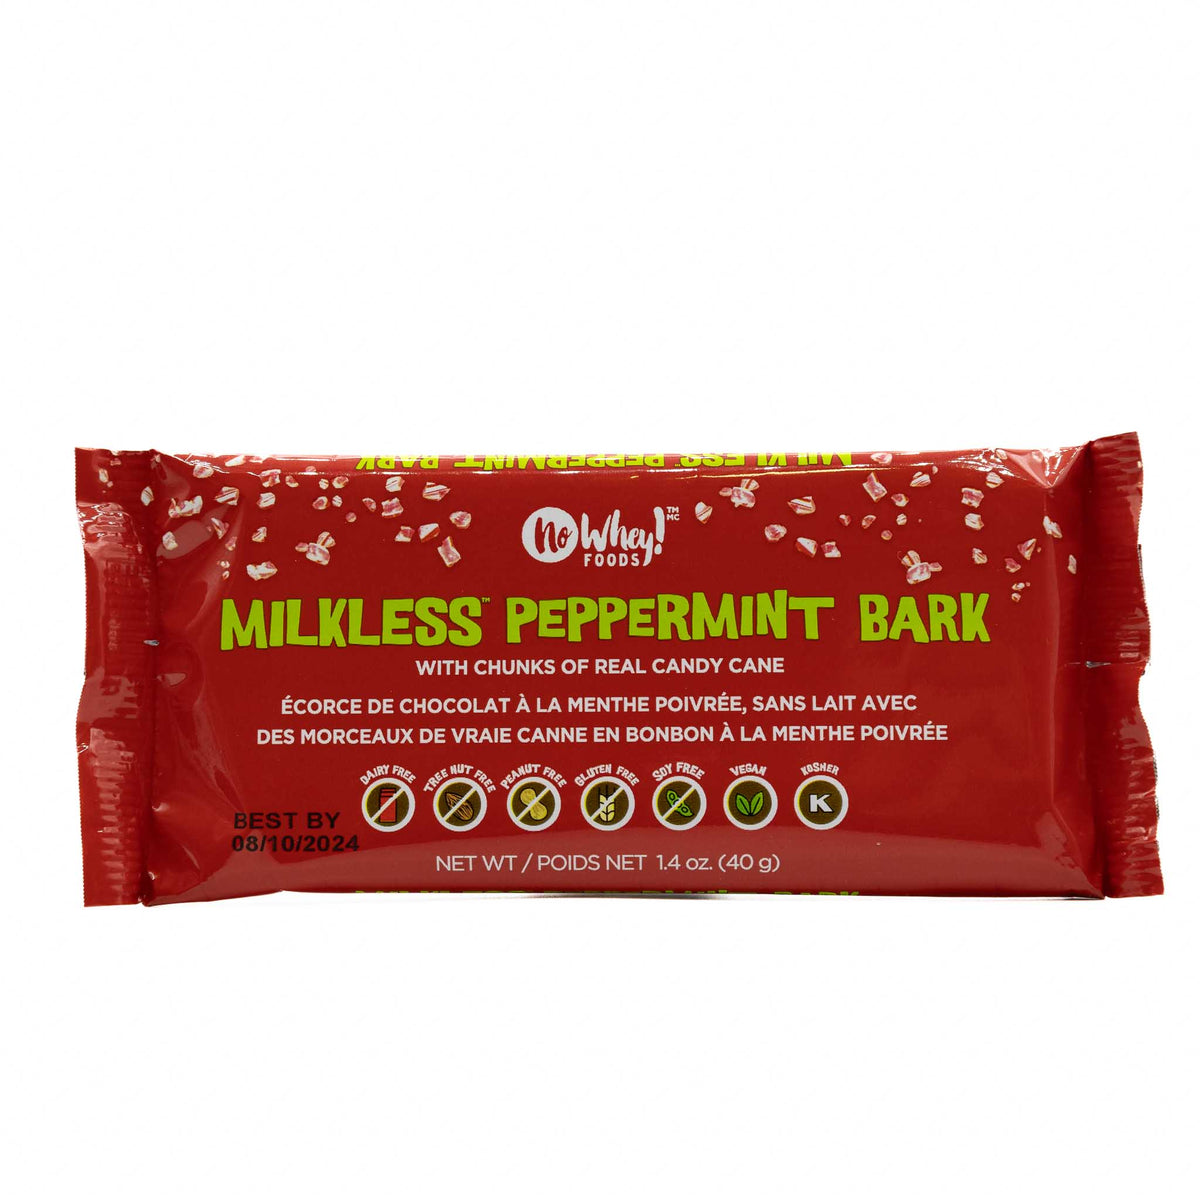 No Whey Milkless Peppermint Bark